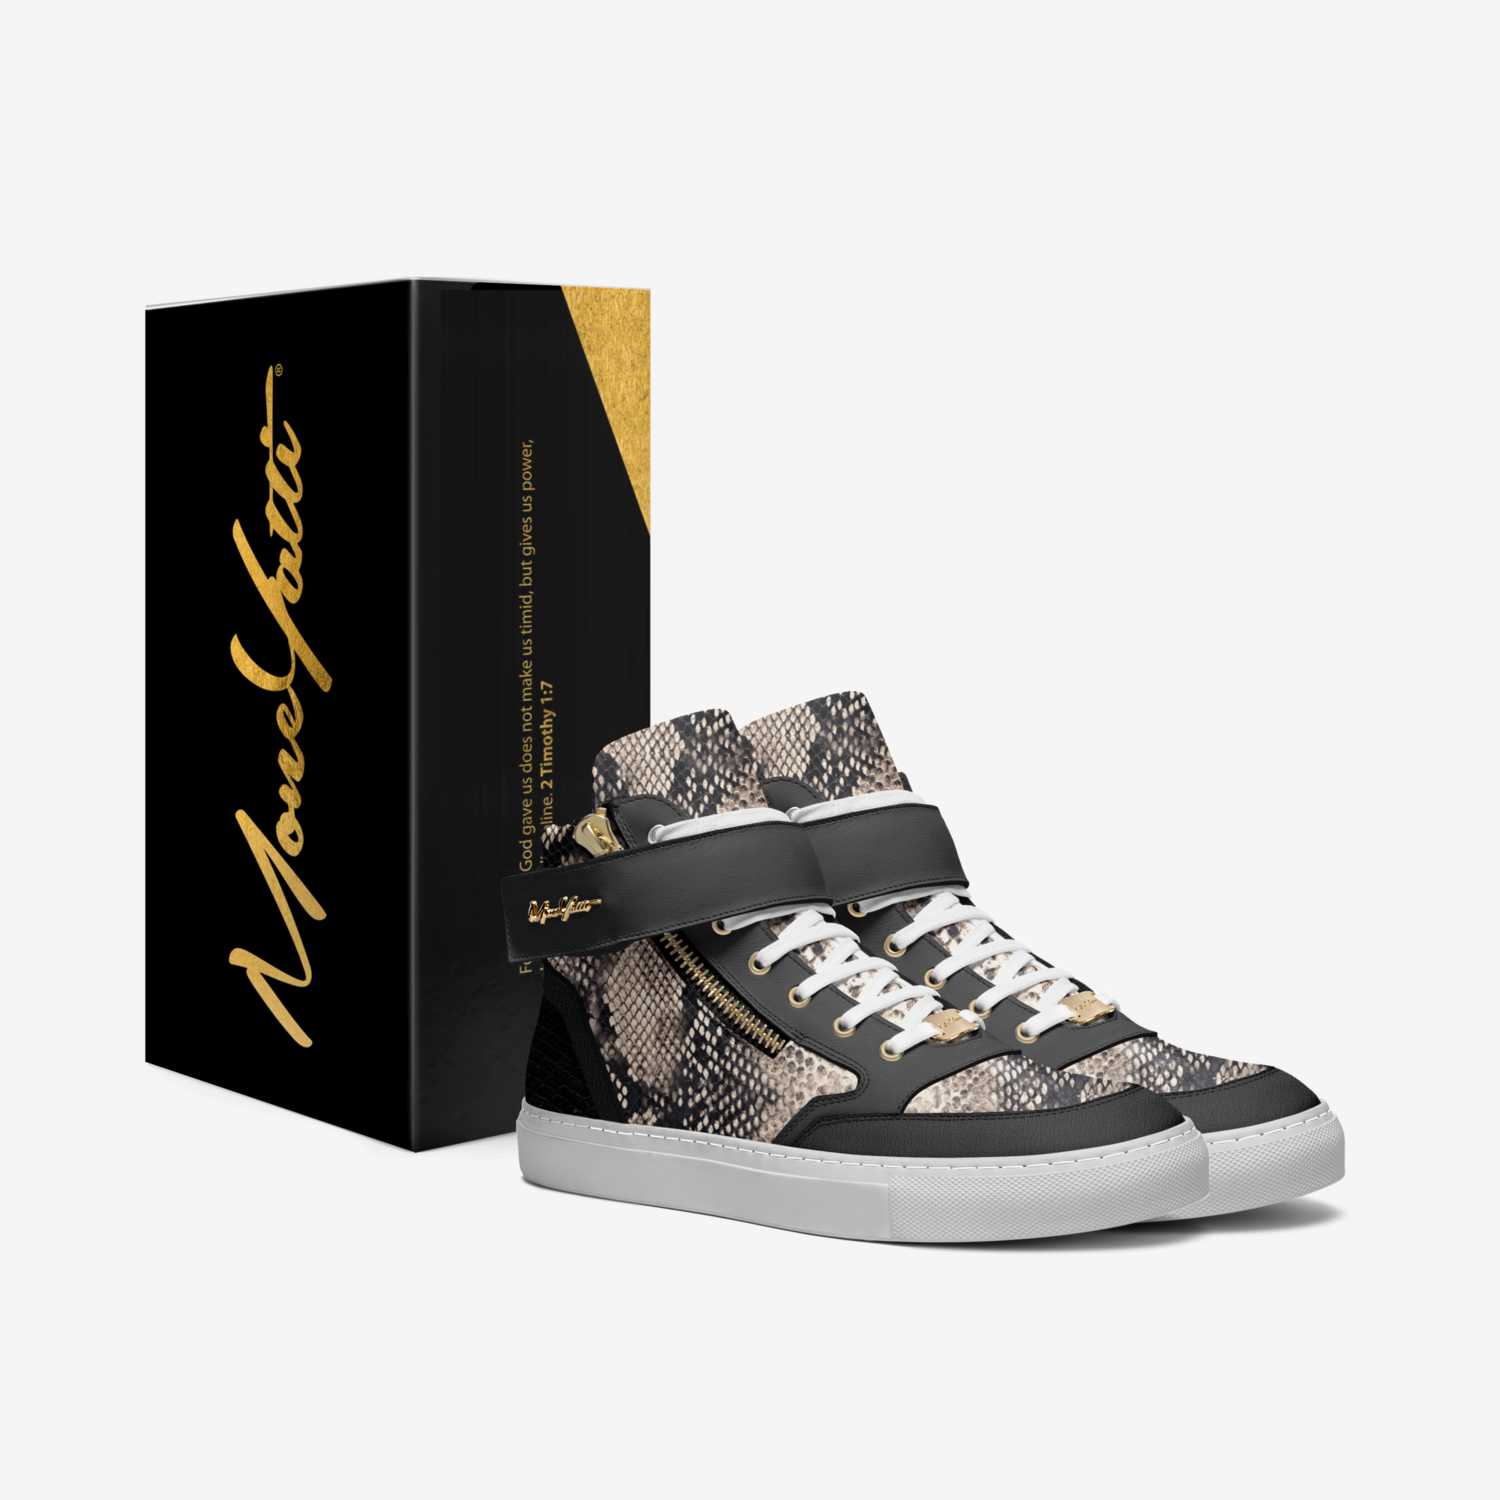 MONEYATTI CLS8W custom made in Italy shoes by Moneyatti Brand | Box view